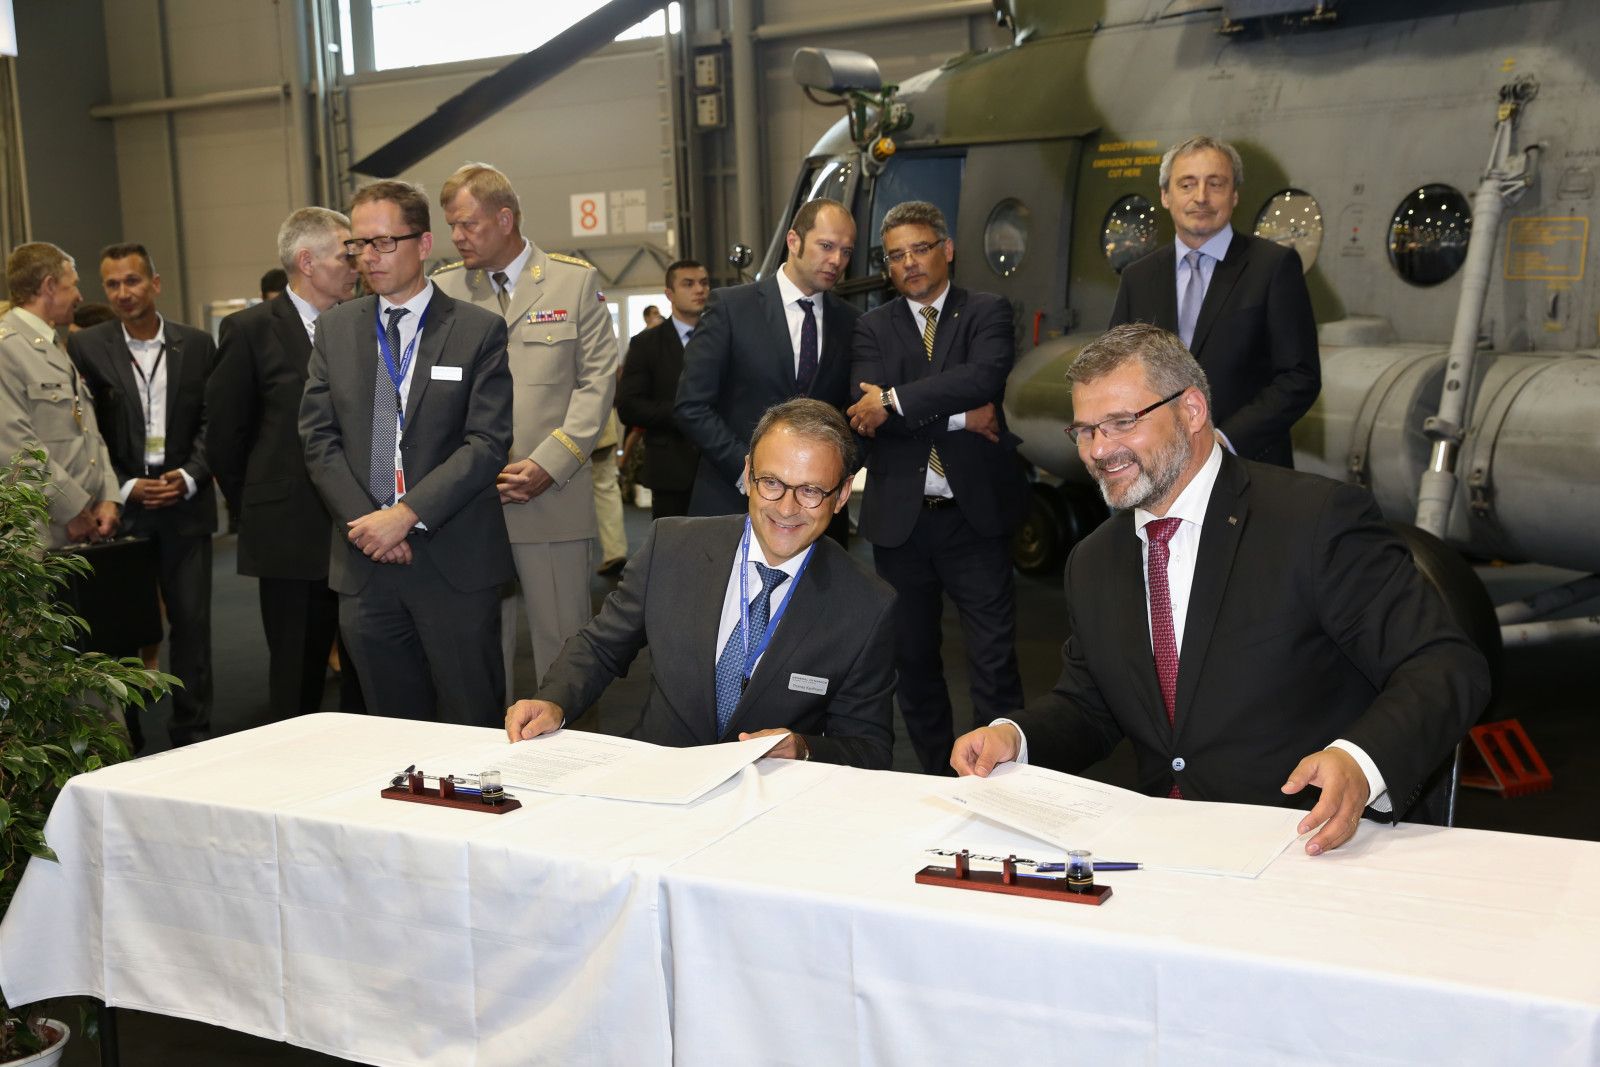 Podpis dohody mezi GDELS a VOP (Thomas Kauffmann vlevo, Marek Špok vpravo)